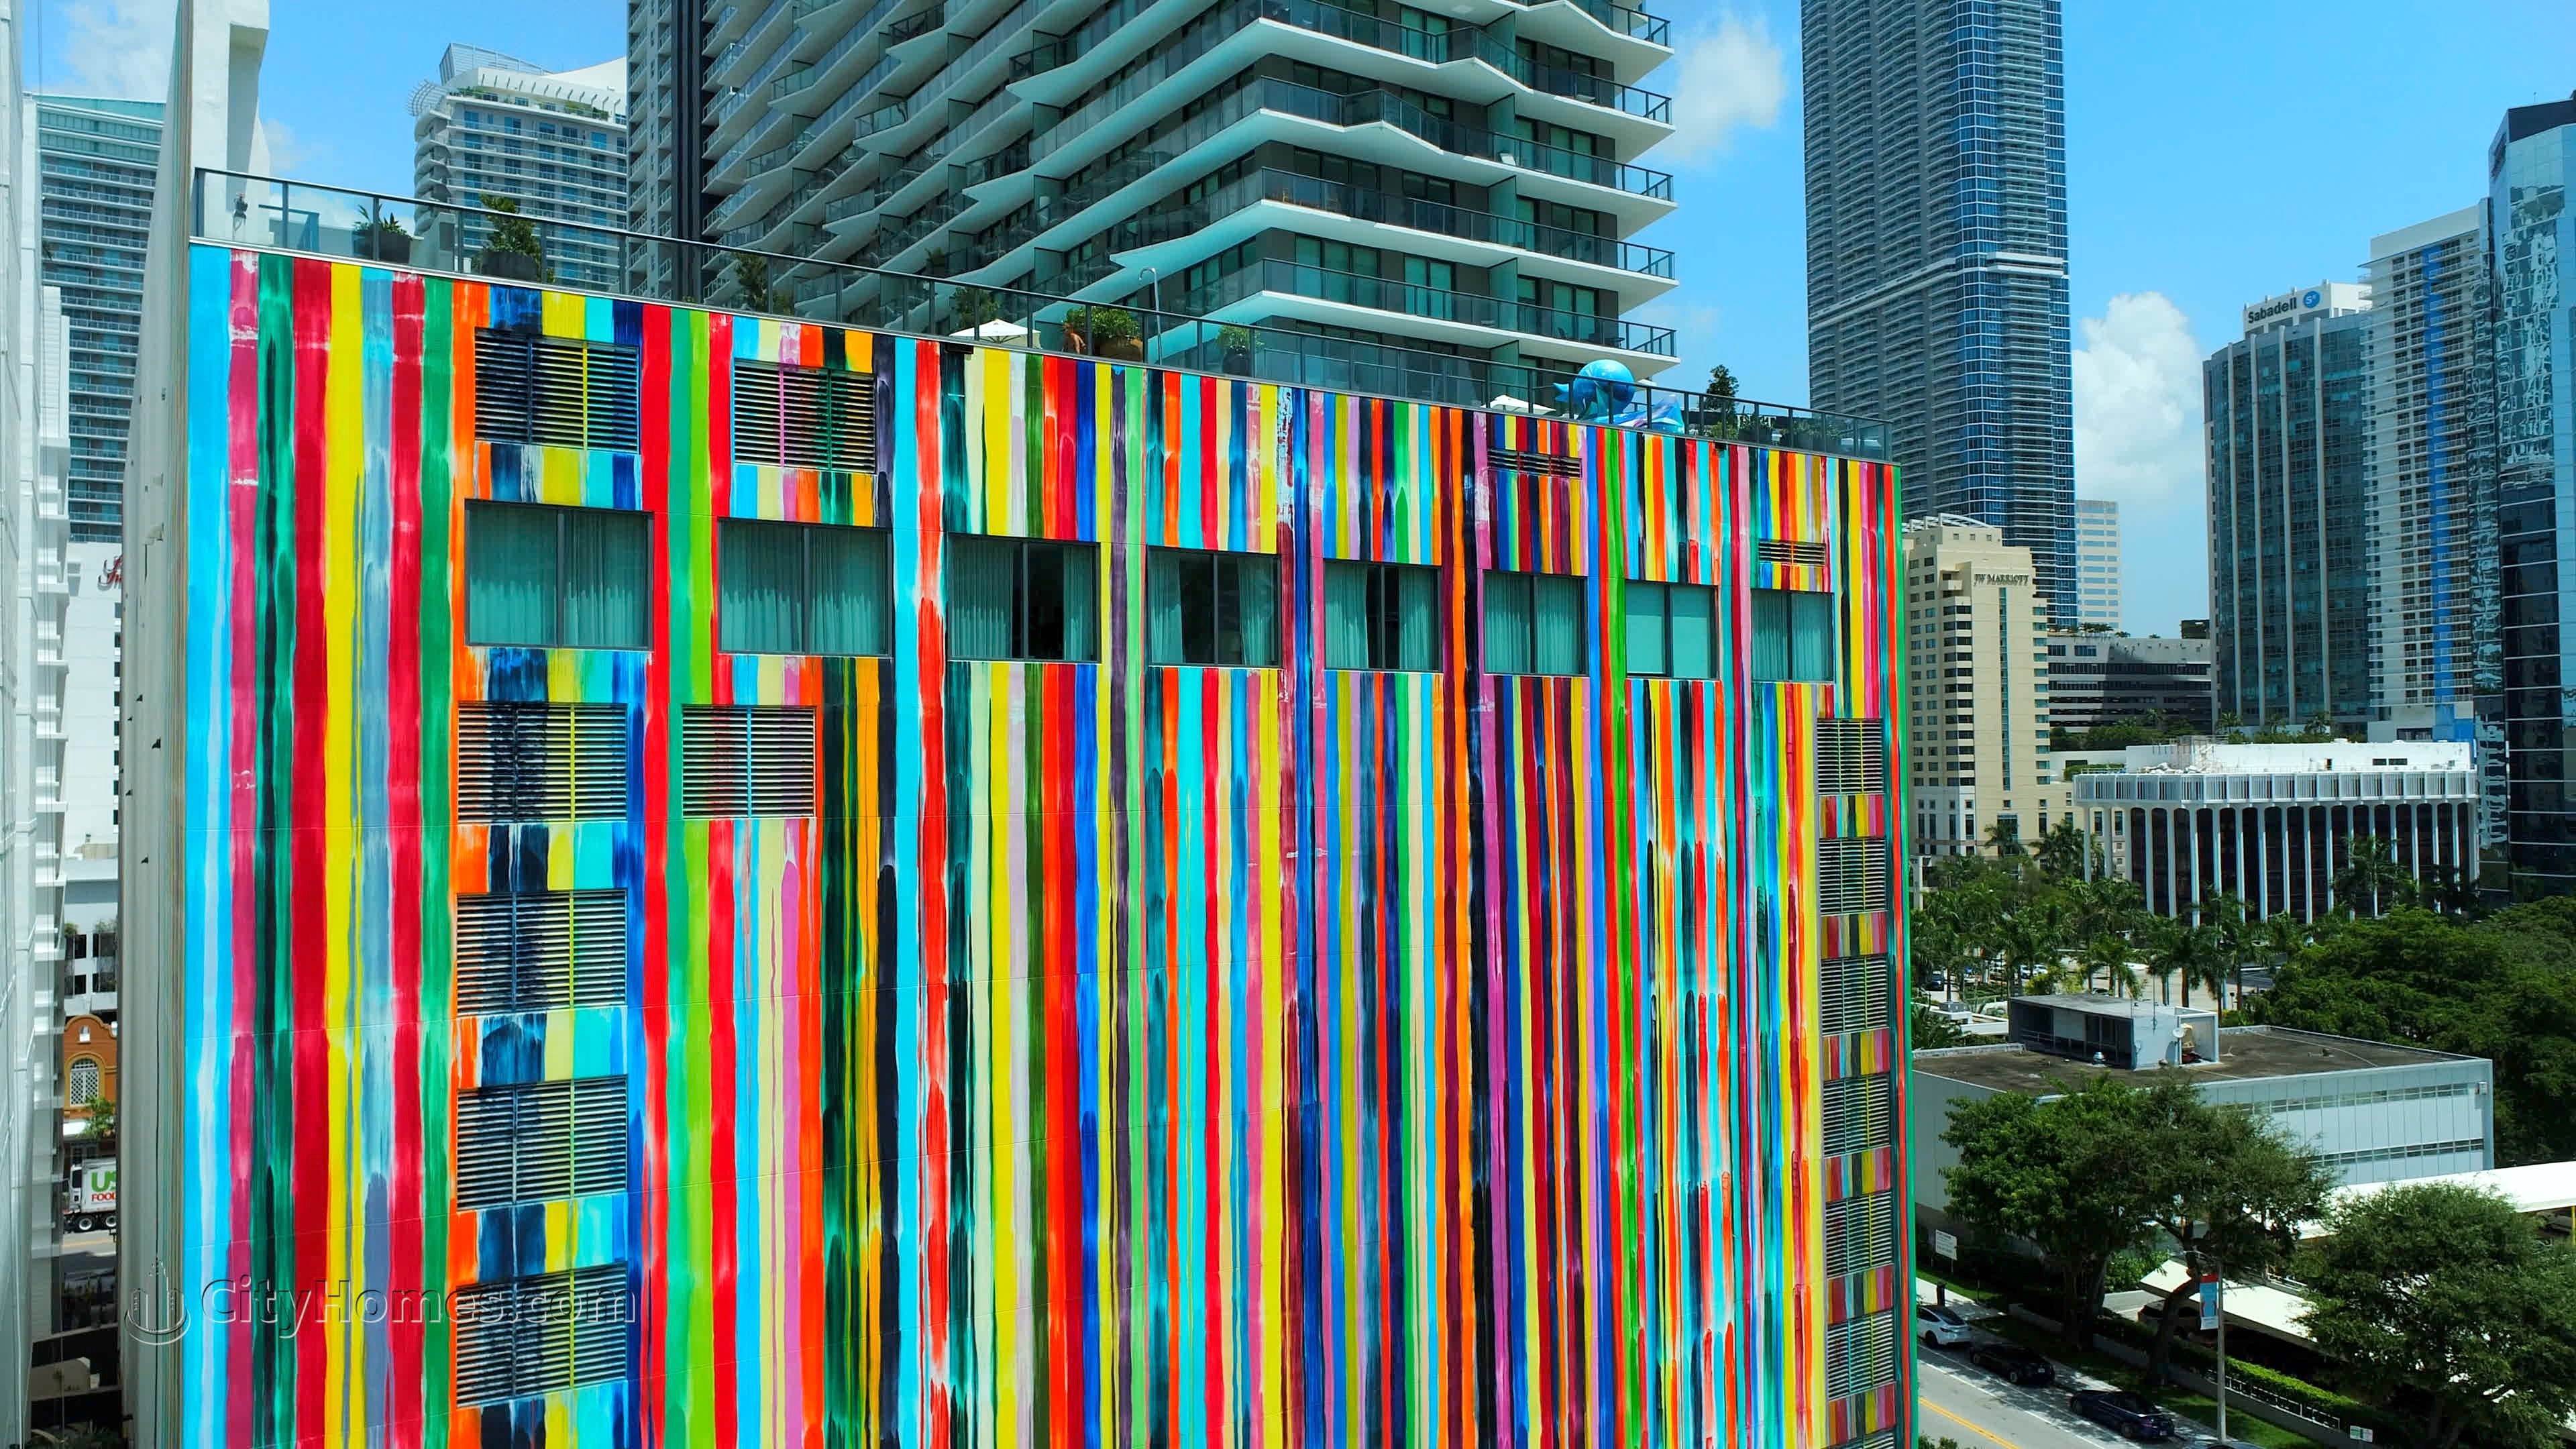 2. SLS Brickell здание в 1300 S Miami Ave, Brickell, Miami, FL 33130